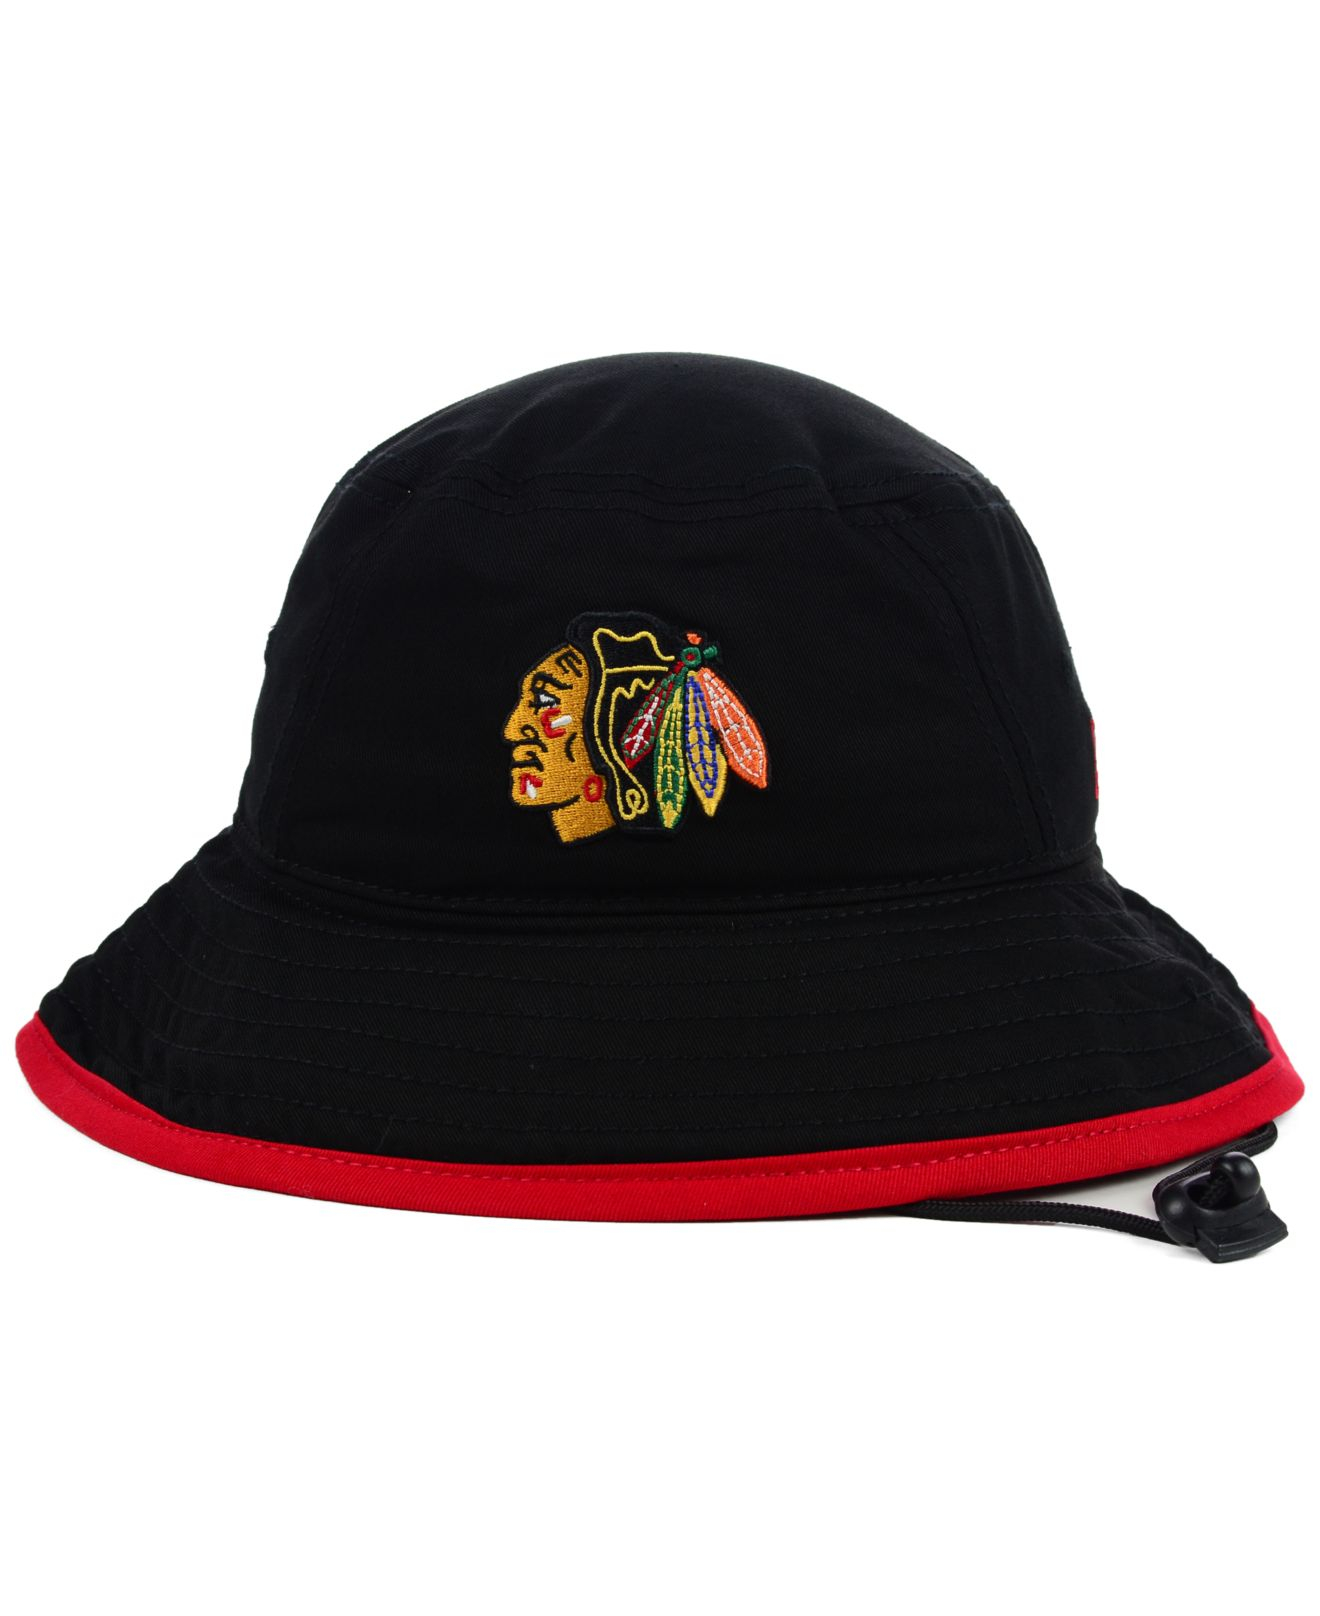  NHL Chicago Blackhawks Basic 59Fifty Cap, Black, 7 1